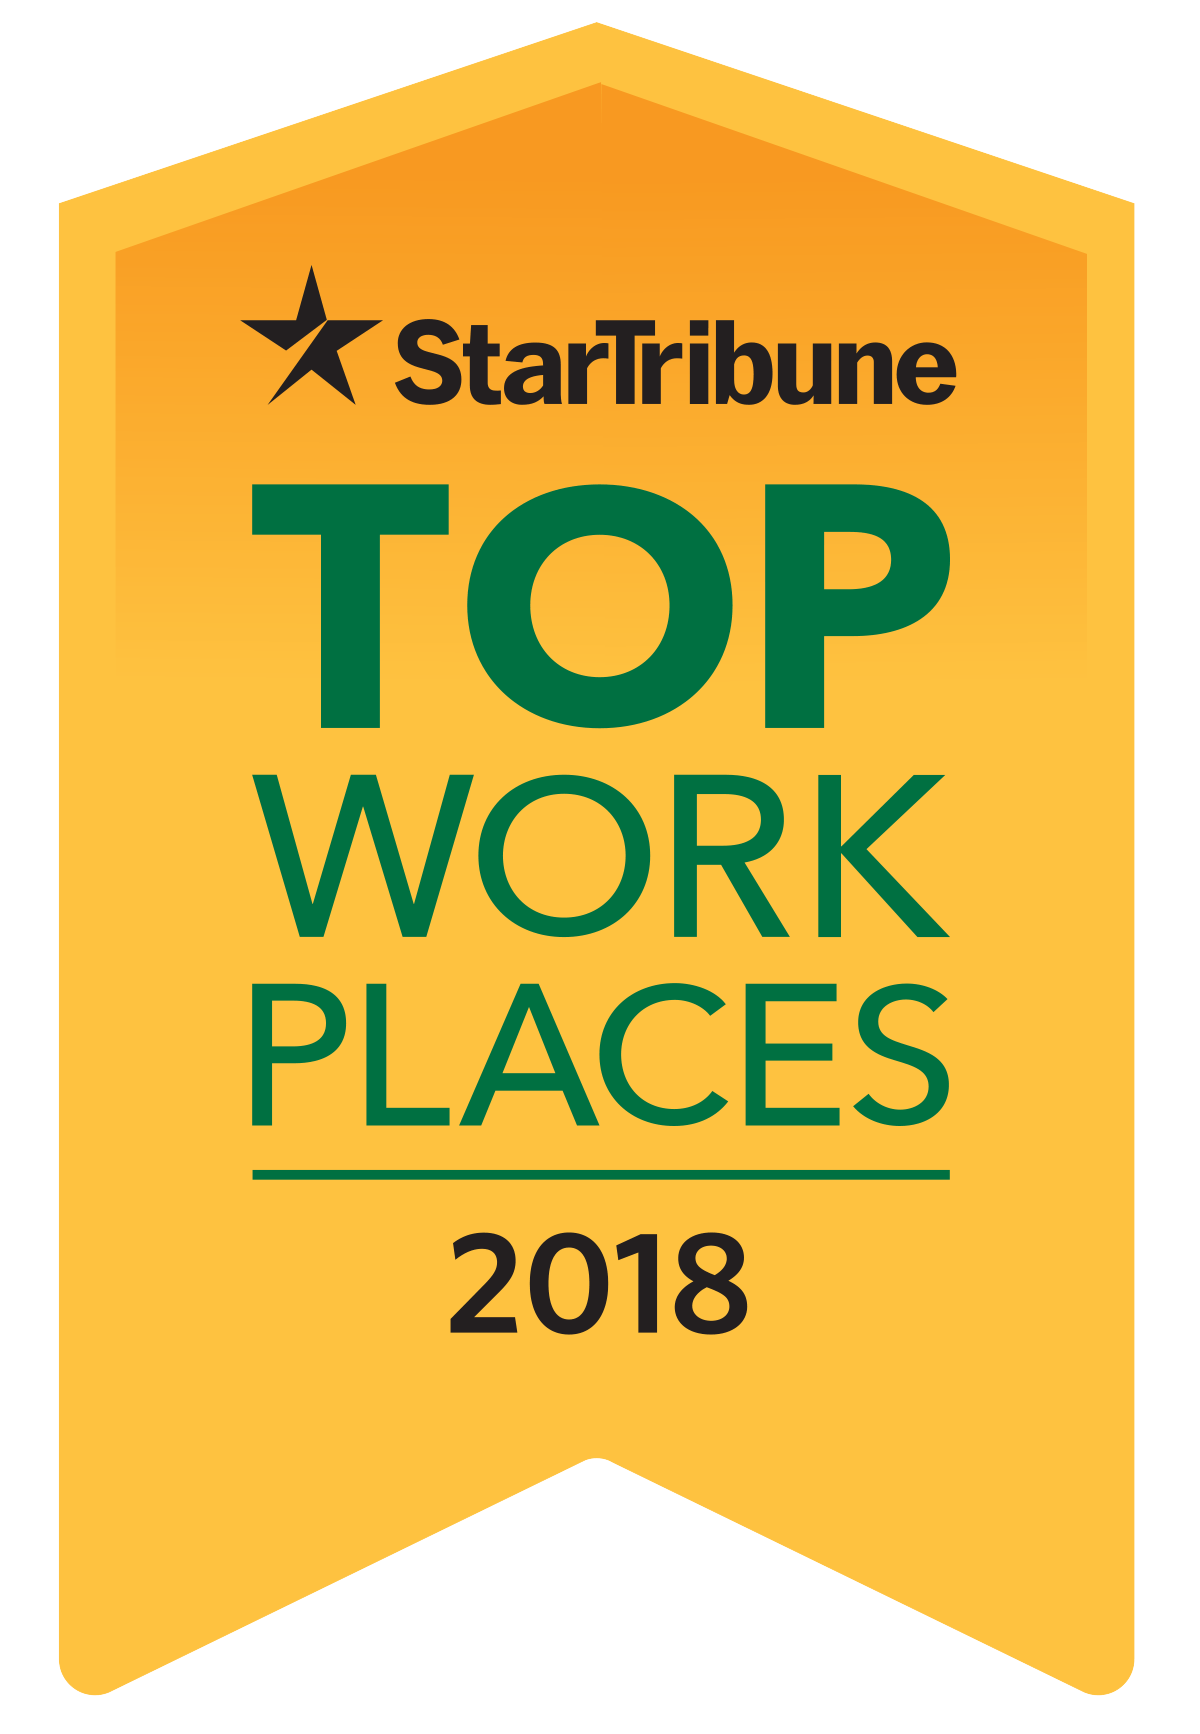 Star Tribune Logo - Top Workplaces PR Materials